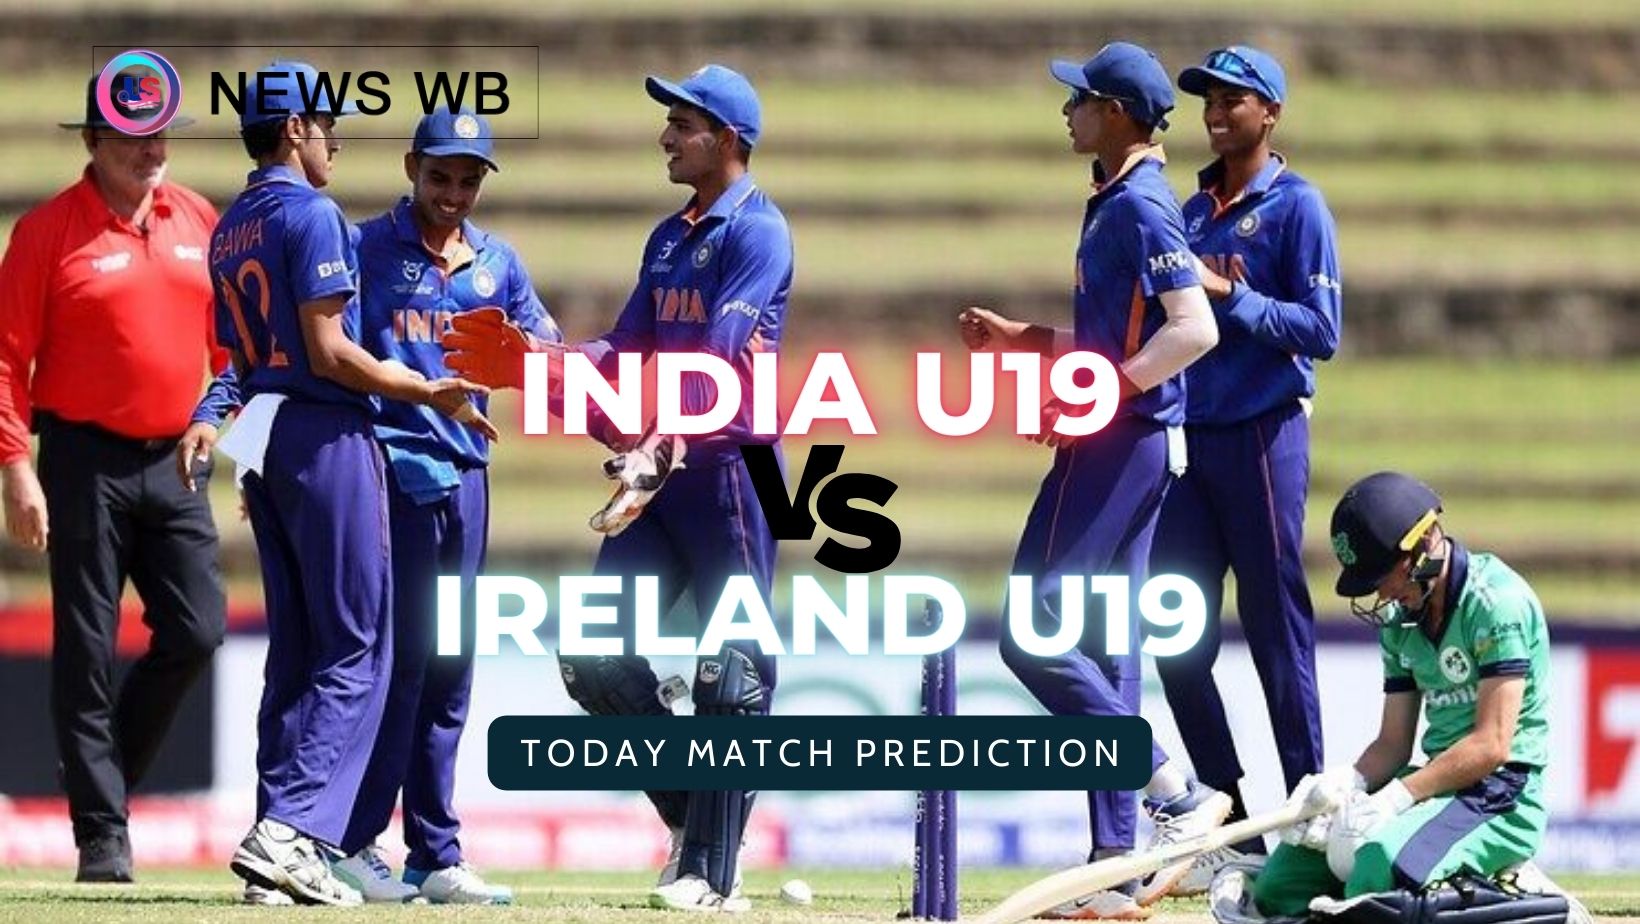 Today Match Prediction: IND U19 vs IRE U19 Dream11 Team, India U19 vs Ireland U19 15th Match, Group A, Who Will Win?